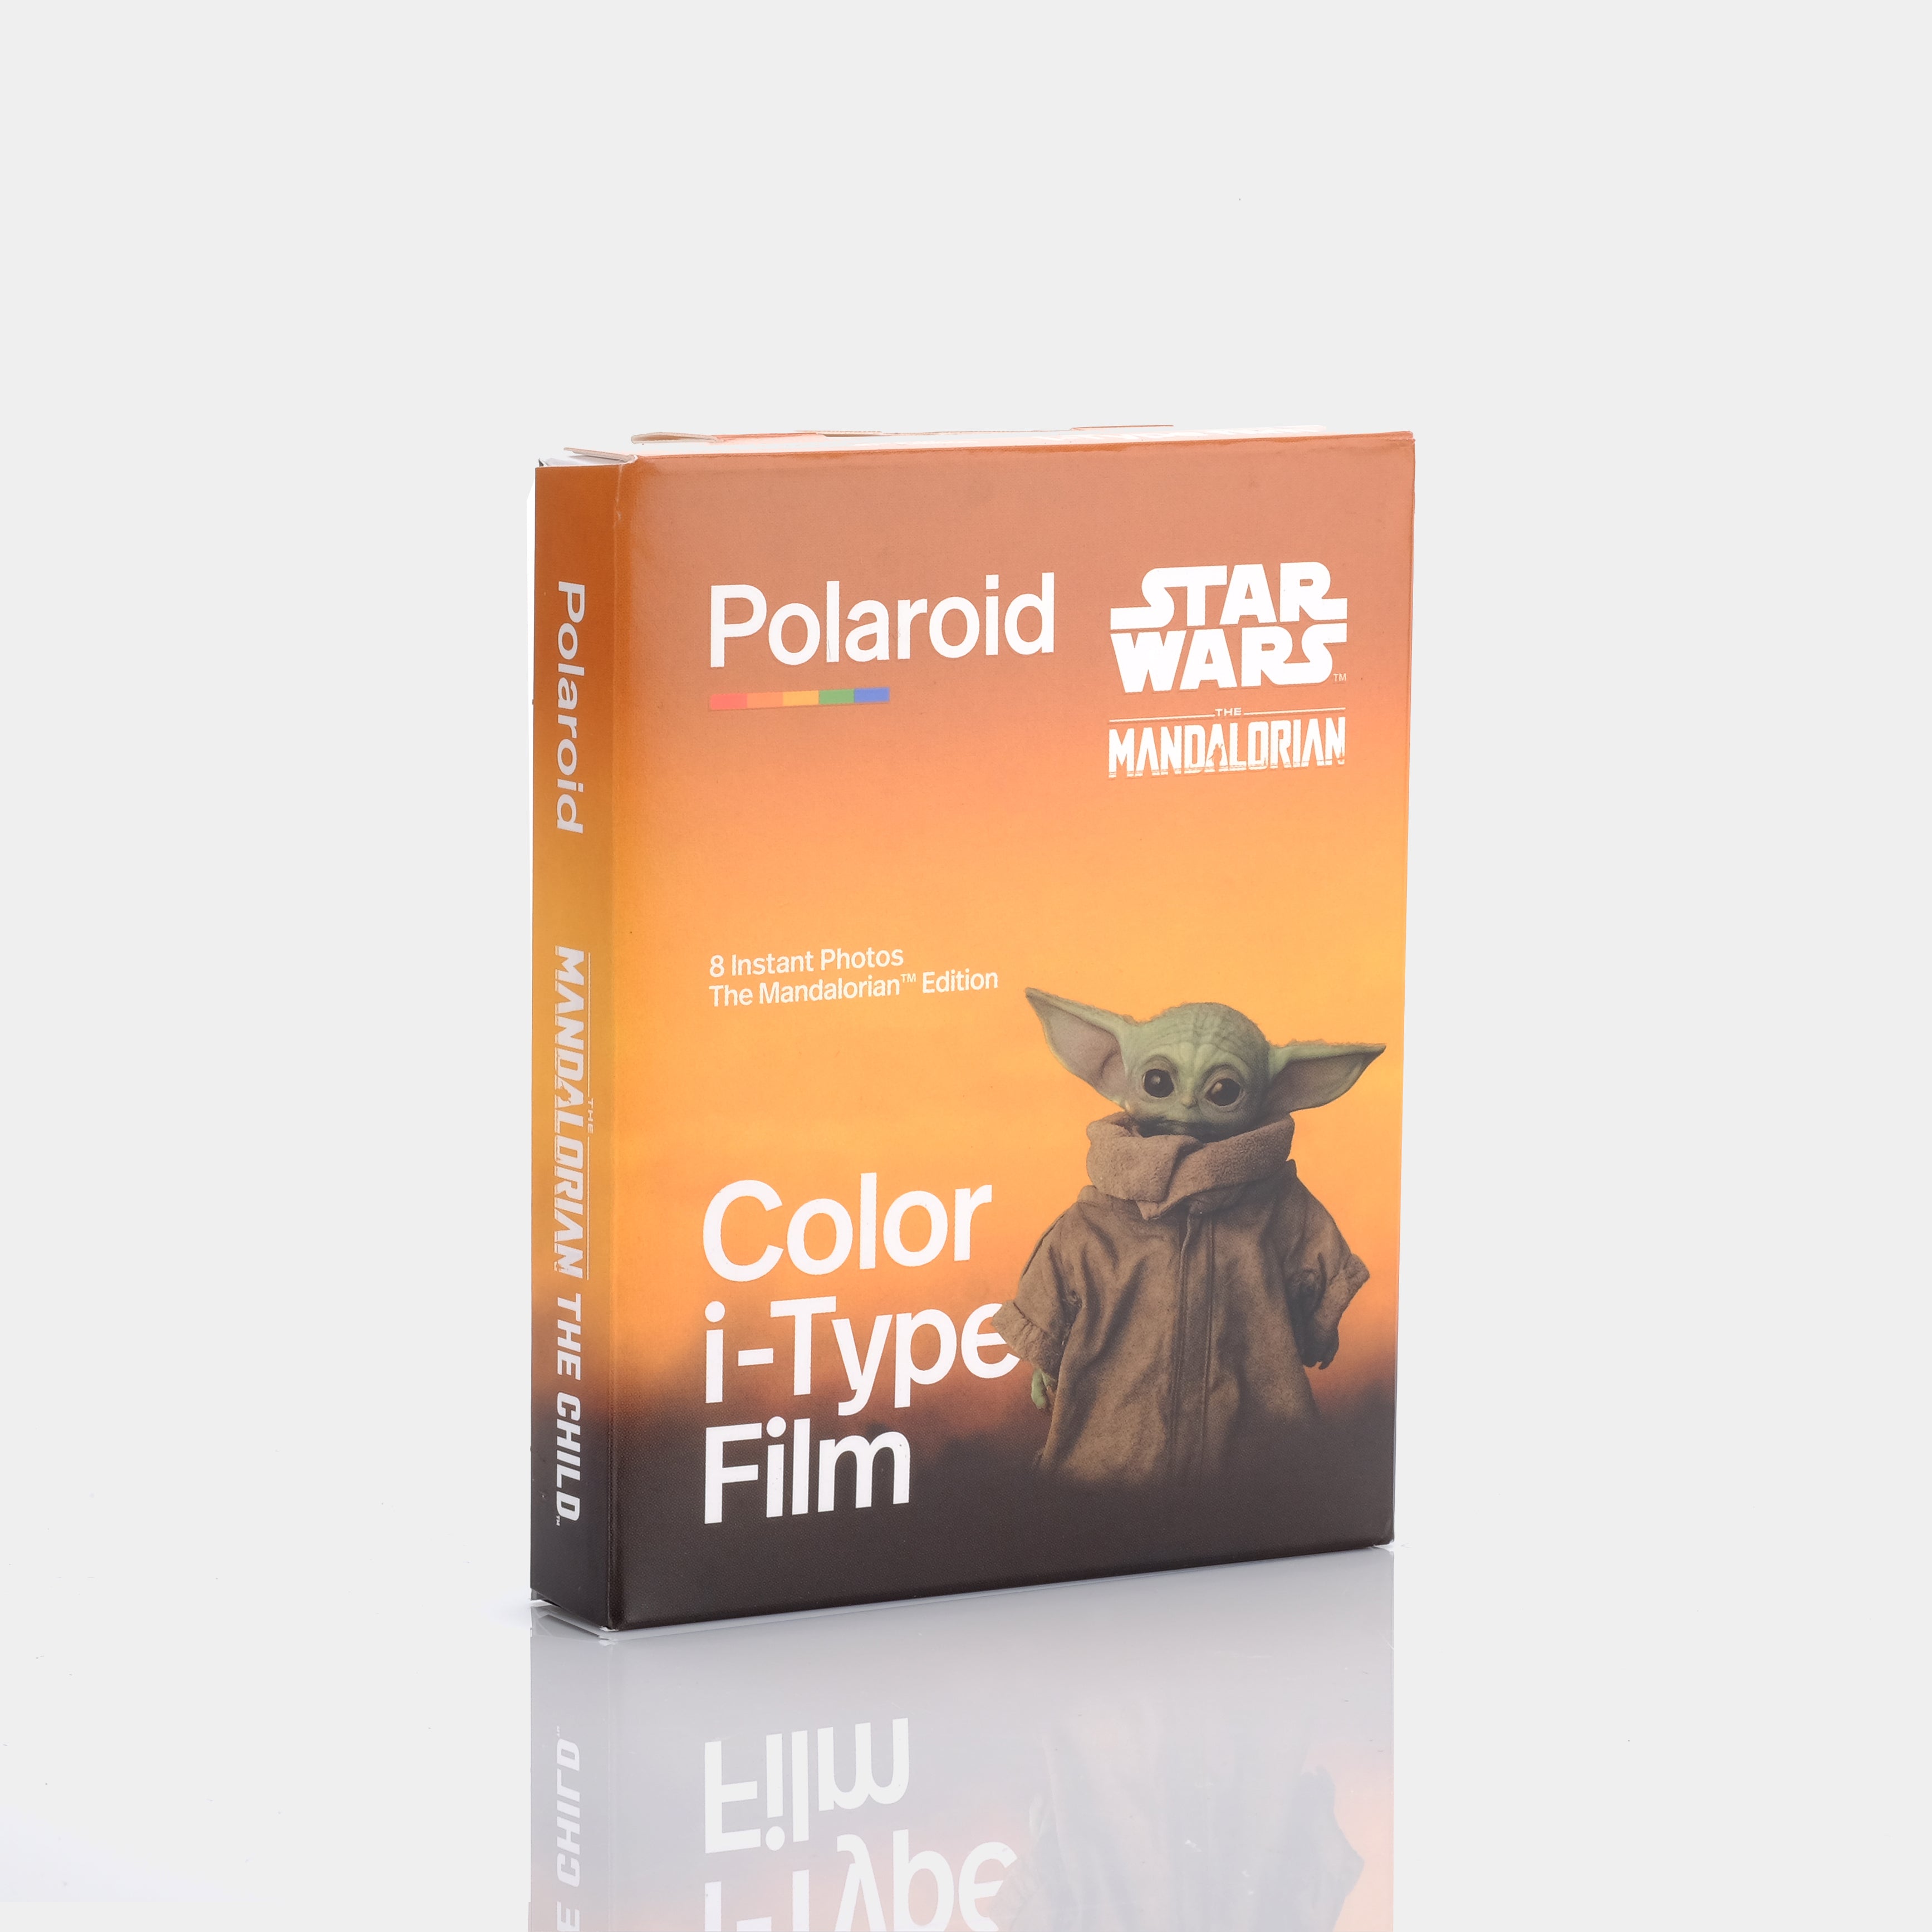 Polaroid Color i-Type Instant Film - Star Wars Mandalorian Edition